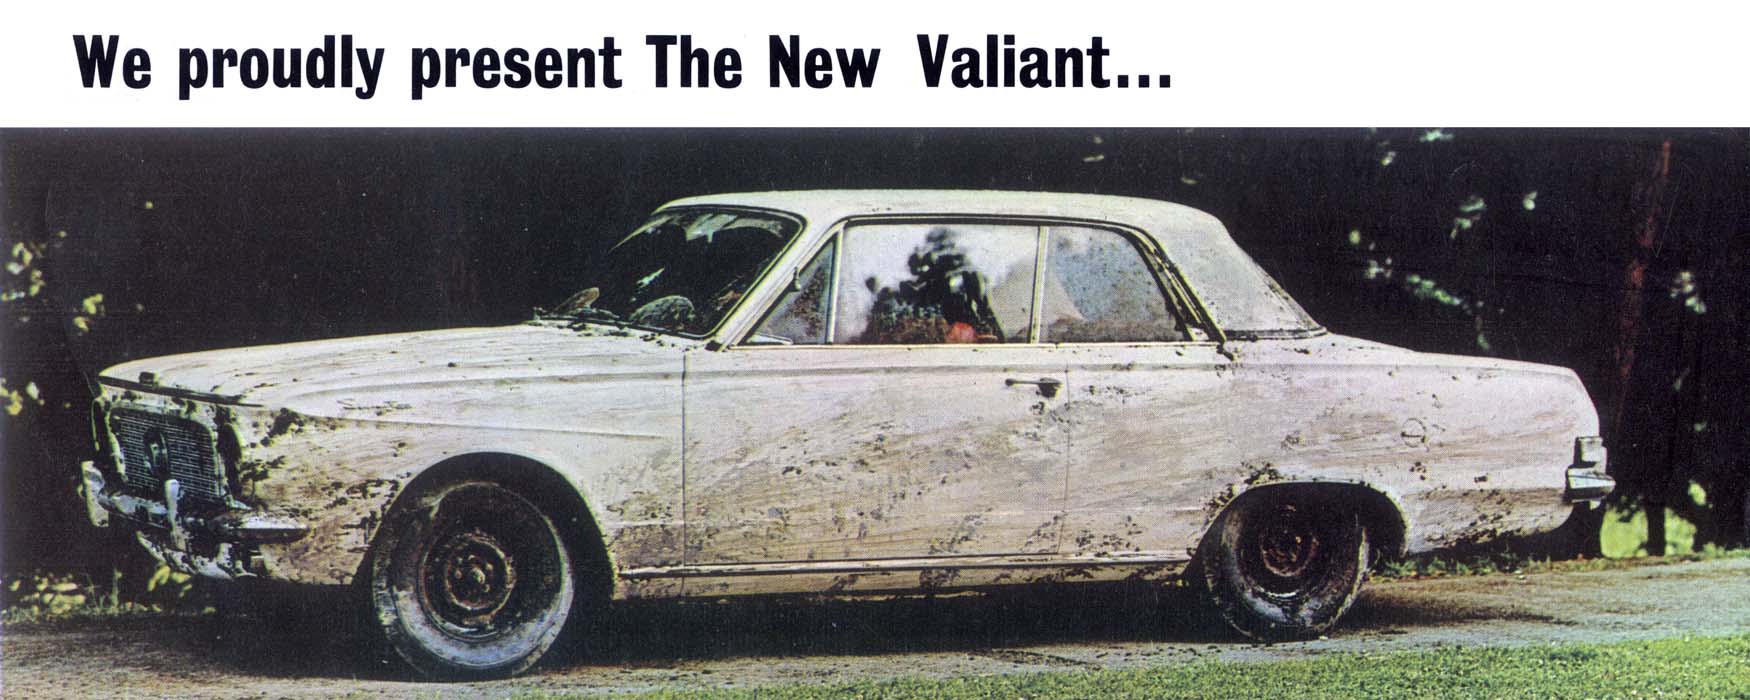 1963_Plymouth_Valiant_Folder-01